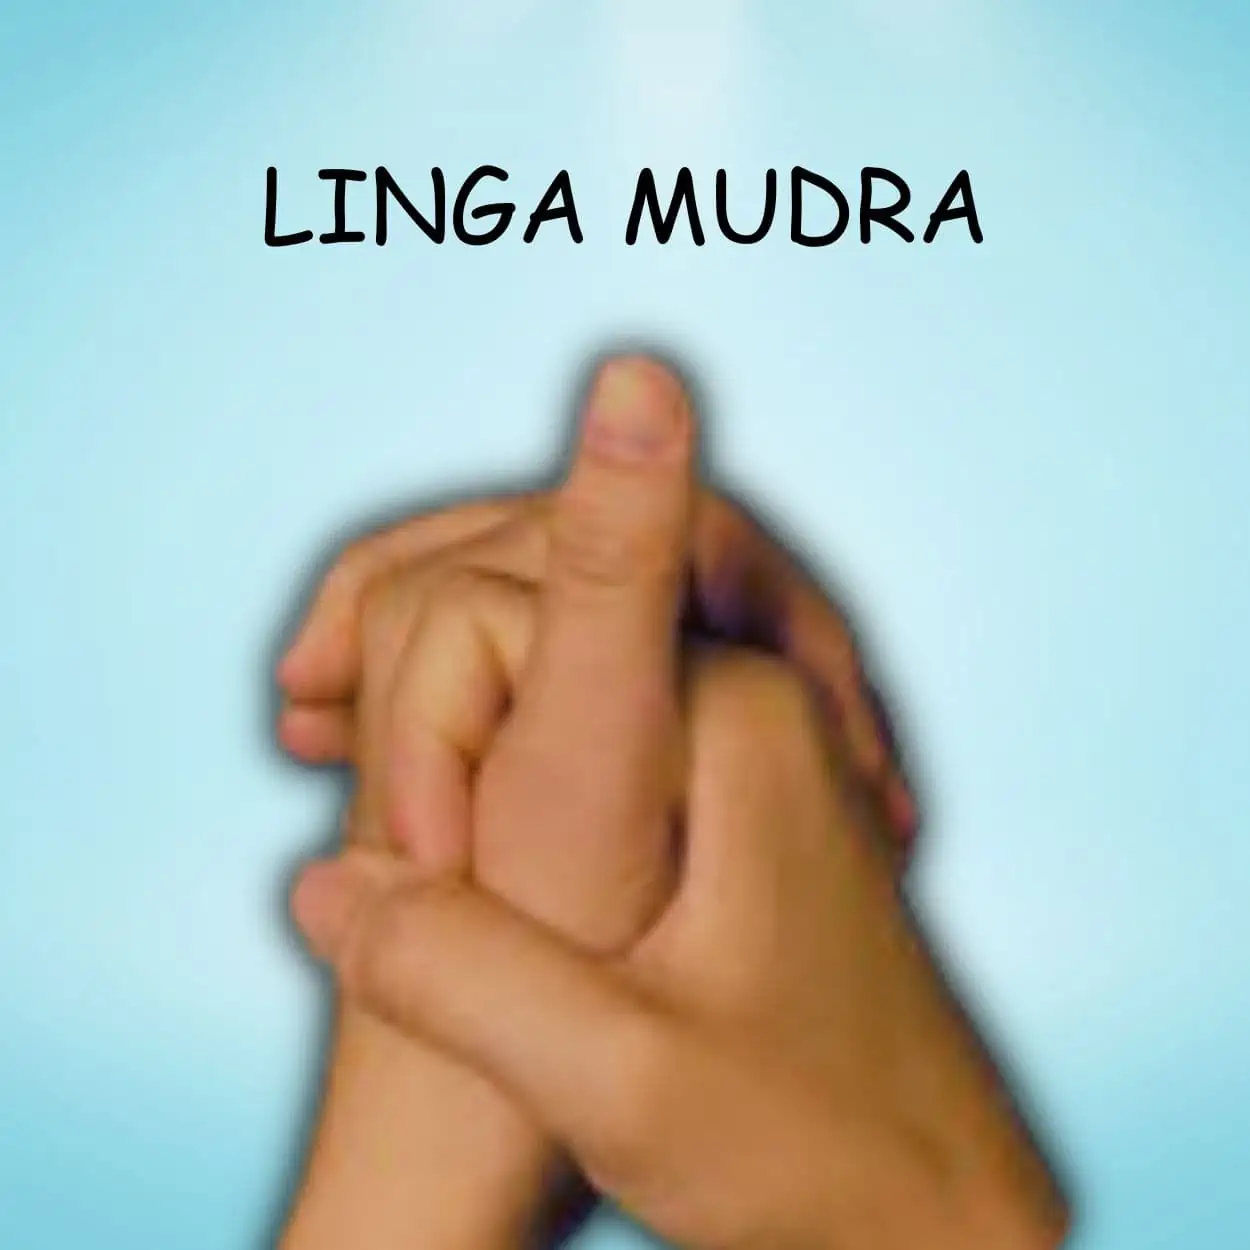 Linga Mudra